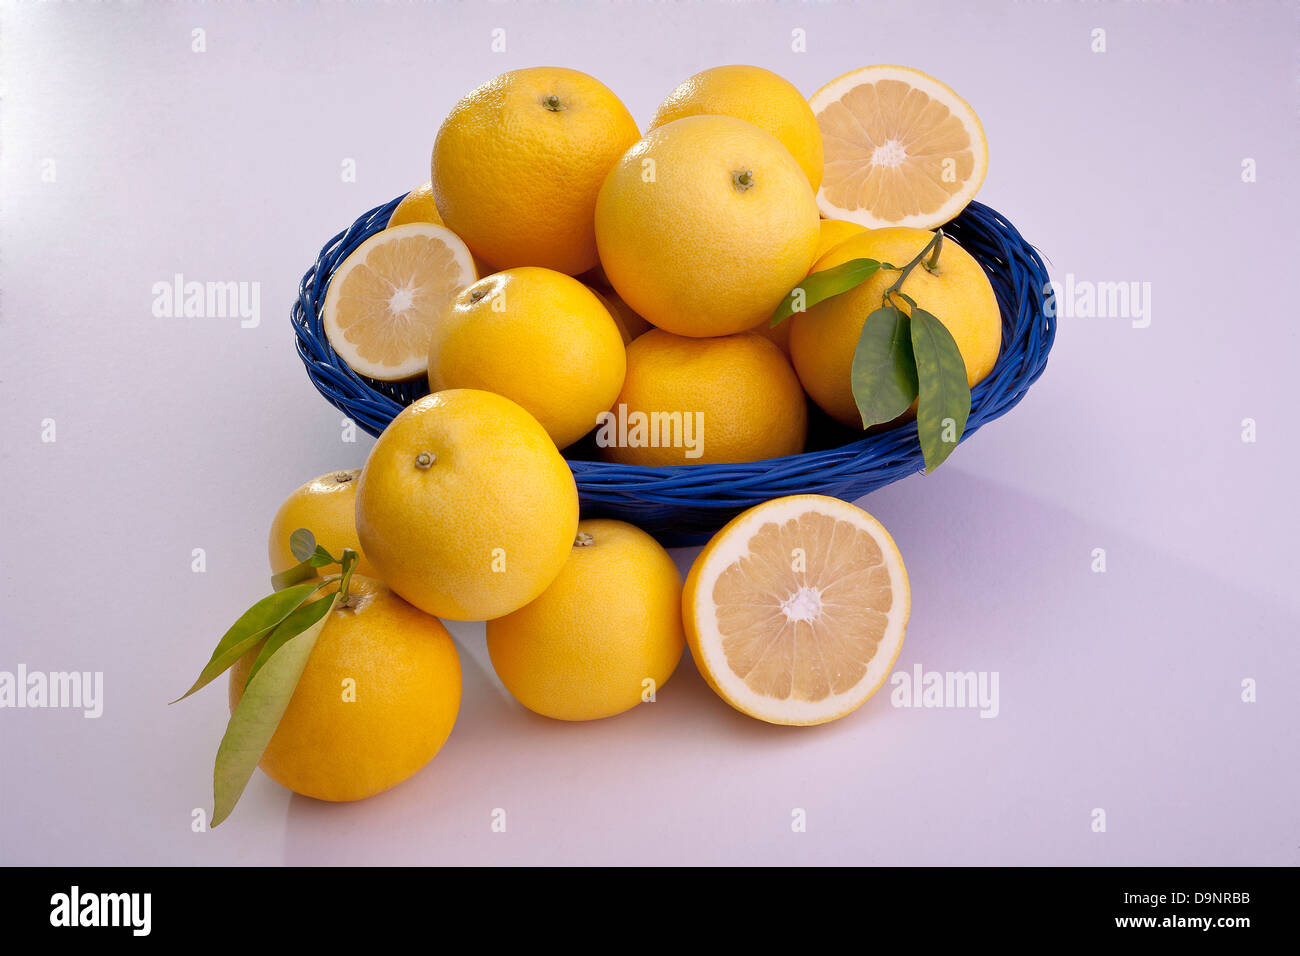 group of fresh california white grapefruit cut and whole Stock Photo